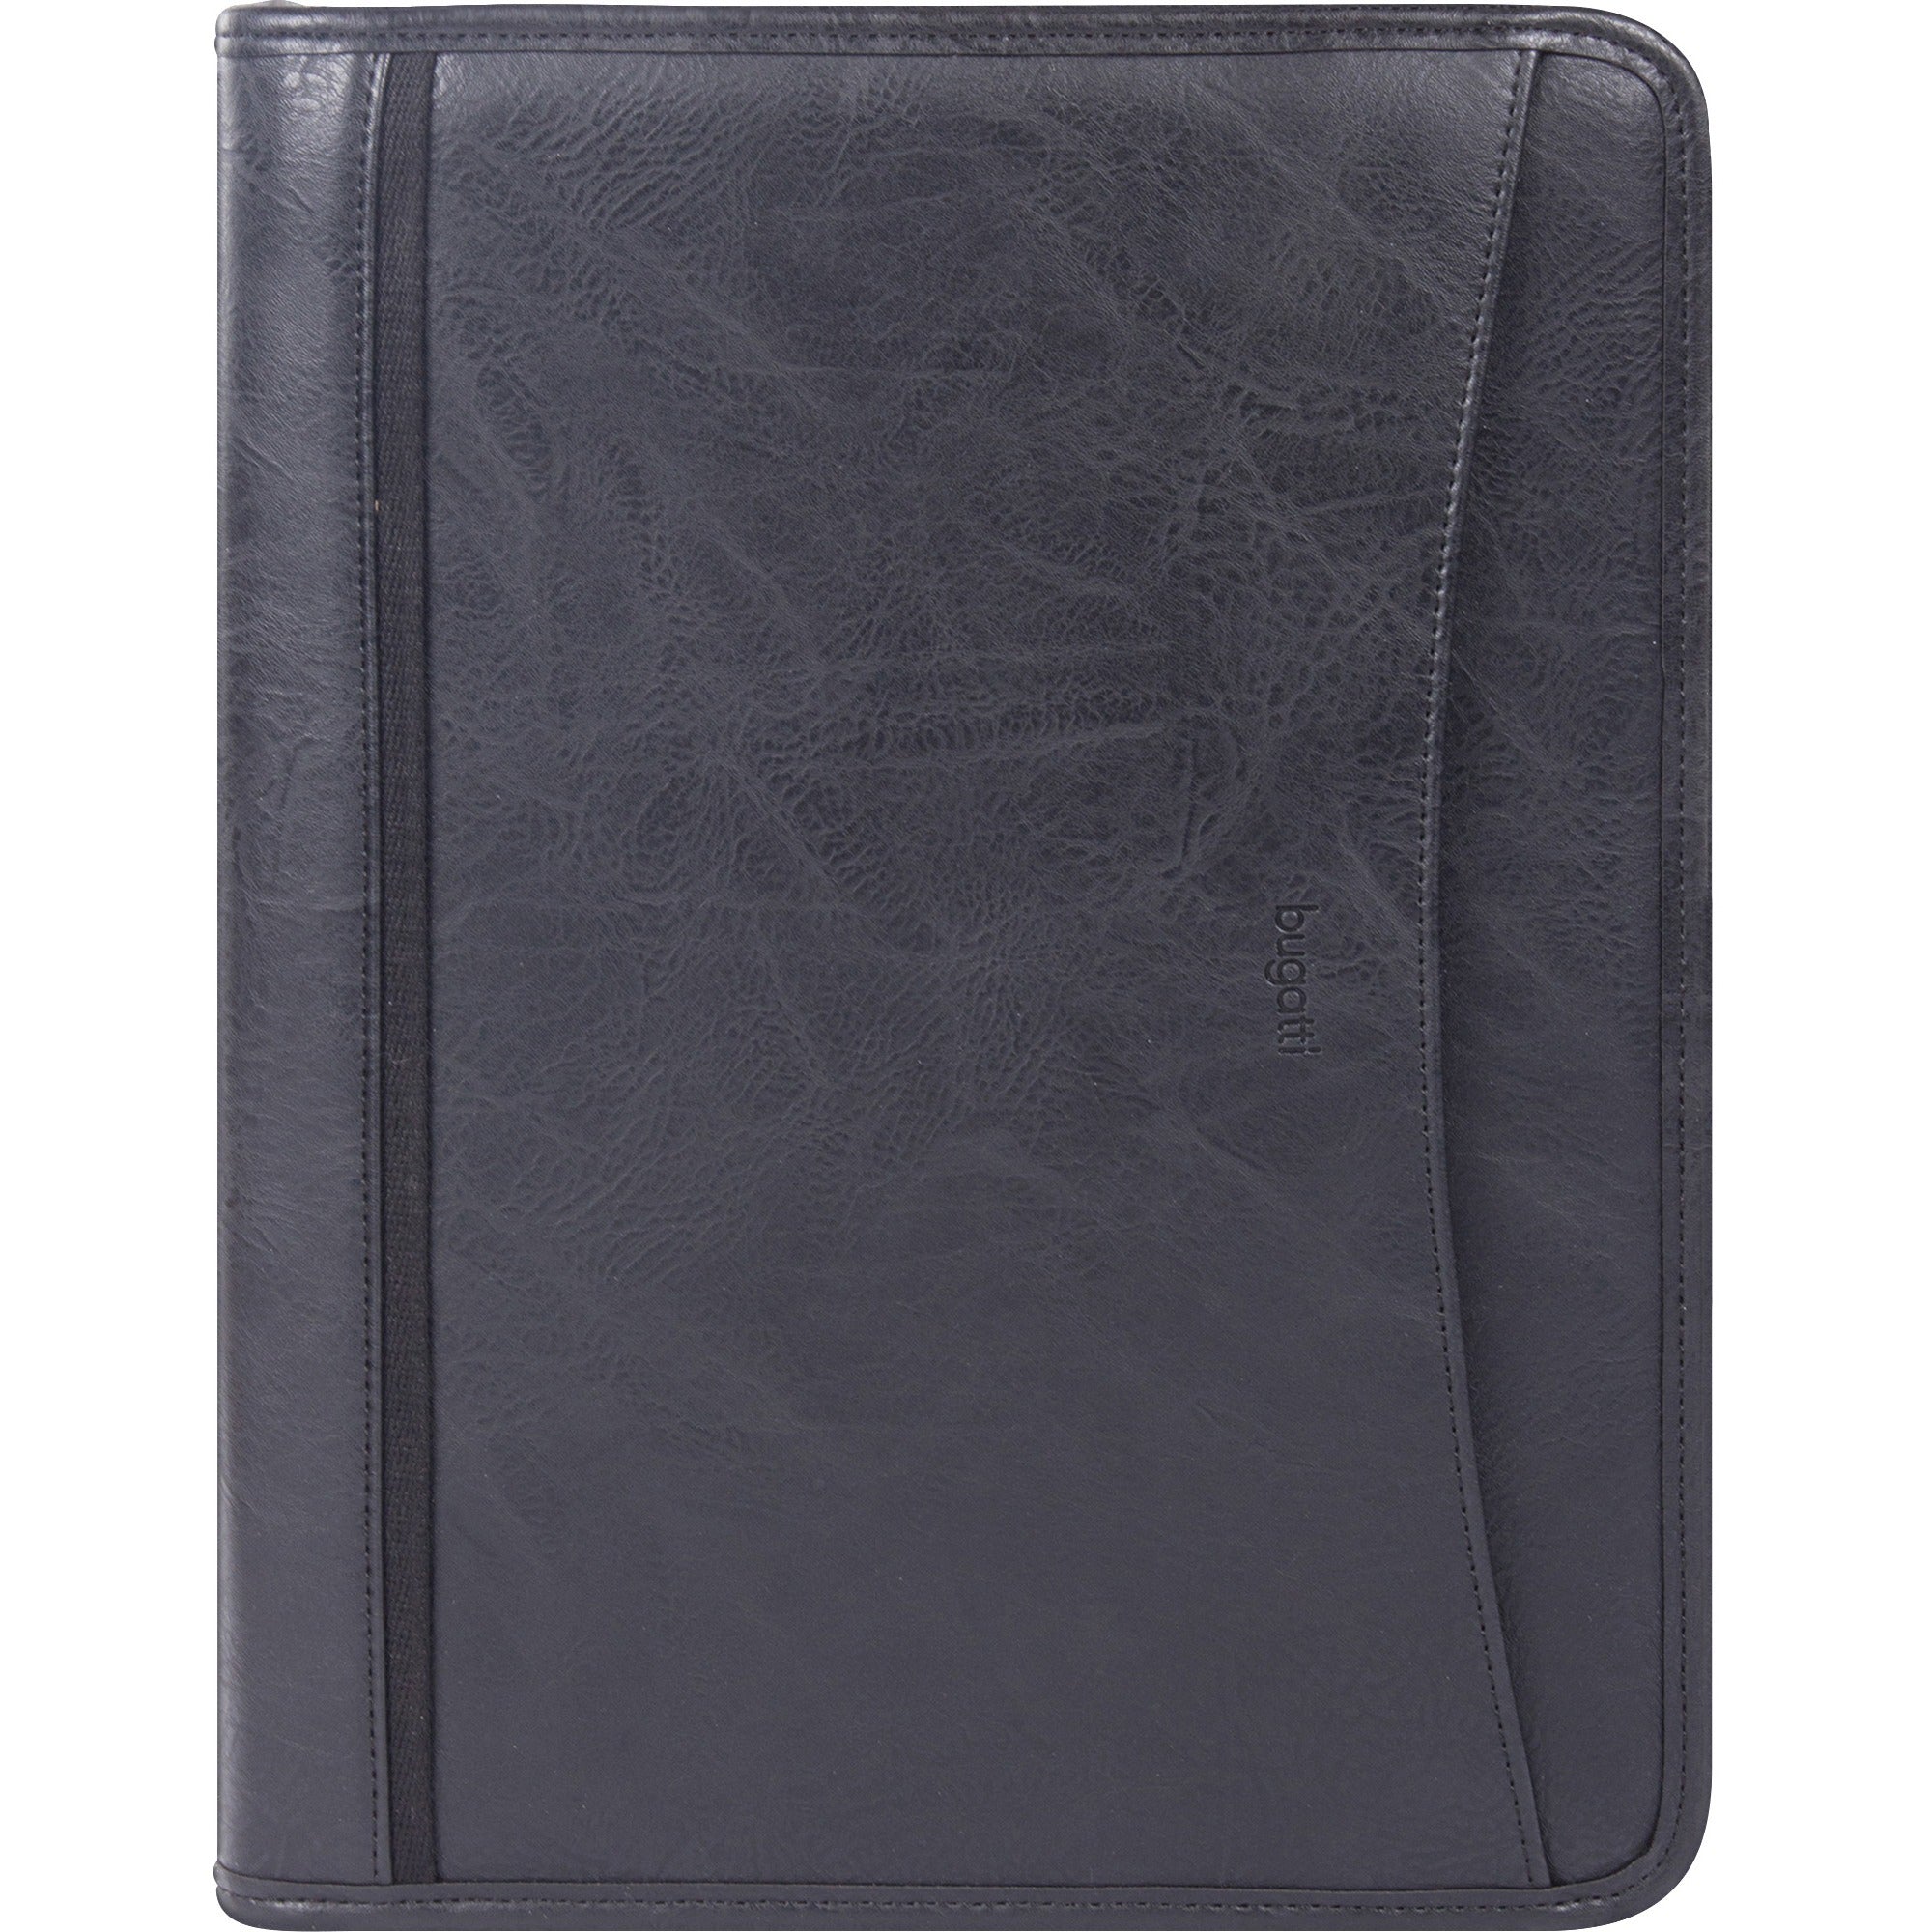 bugatti-valentino-pad-folio-black-1-each_swzwrc1517blk - 2